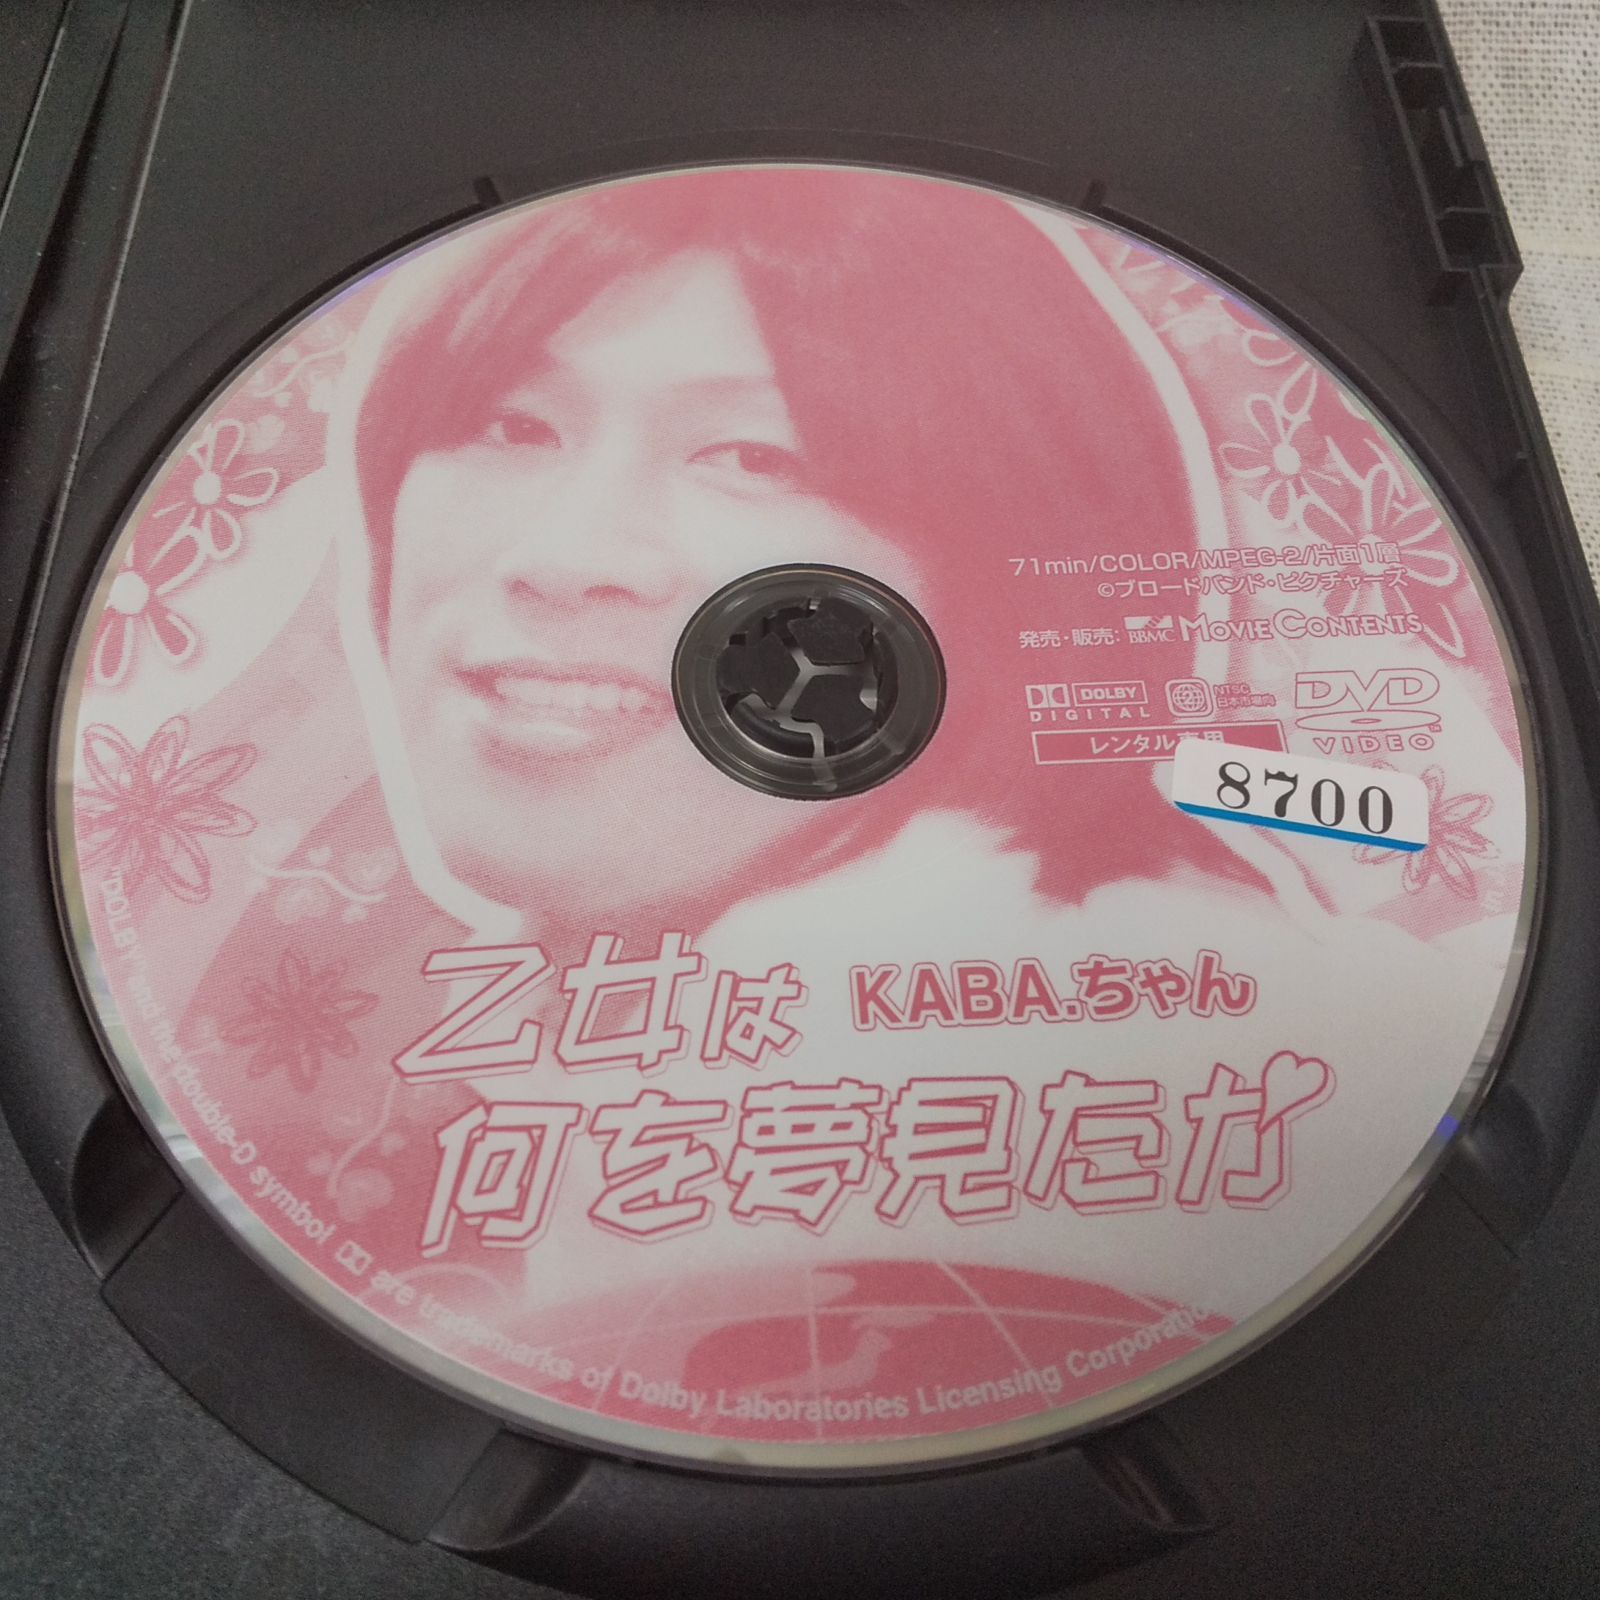 KABA.ちゃん 乙女は何を夢見たか レンタル専用 中古 DVD ケース付き 